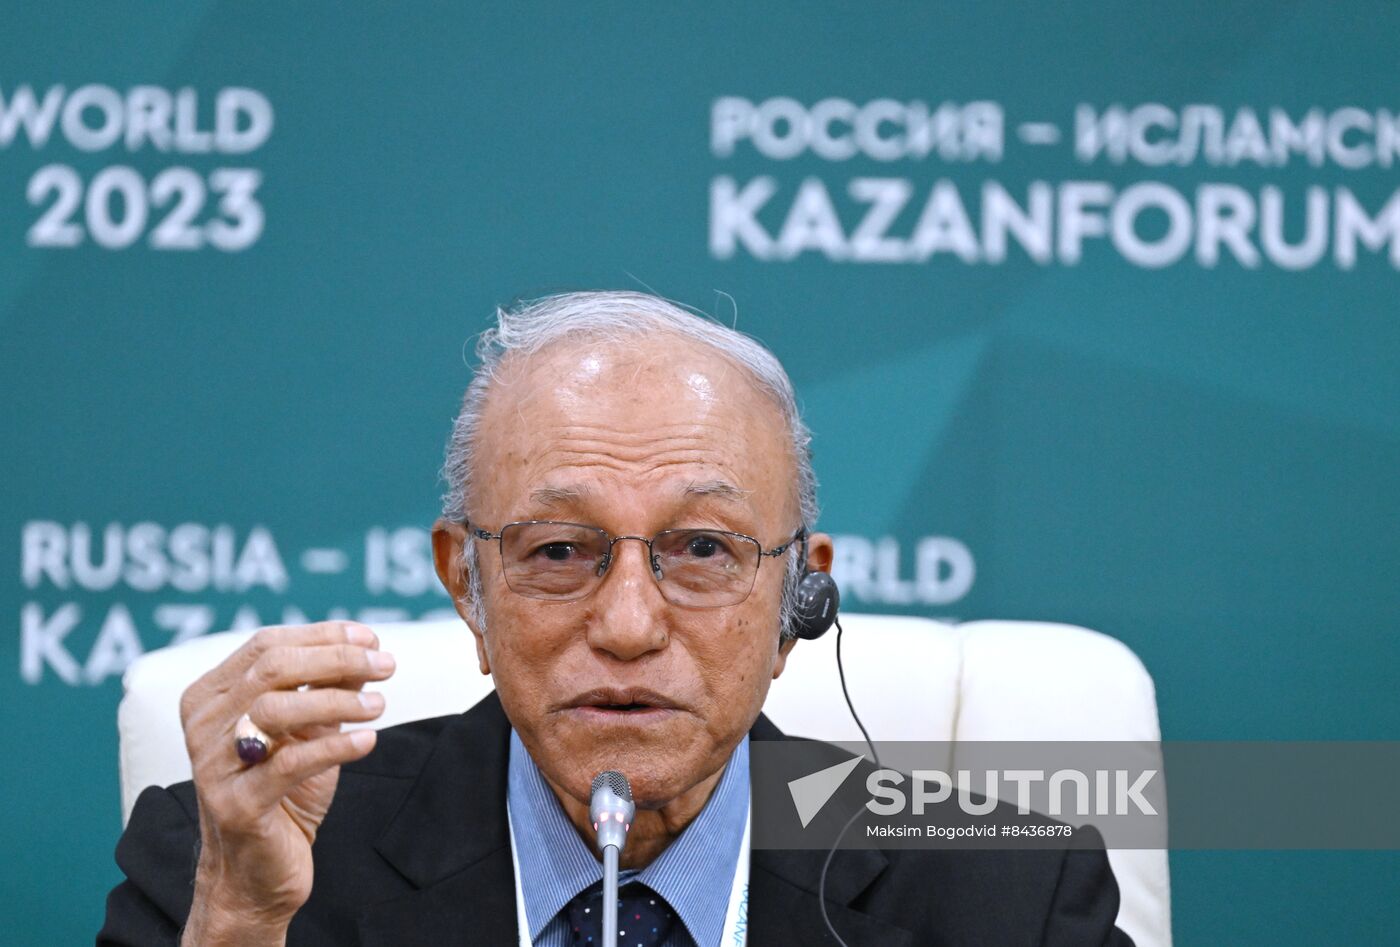 KAZANFORUM 2023. Russia-Indonesia news conference